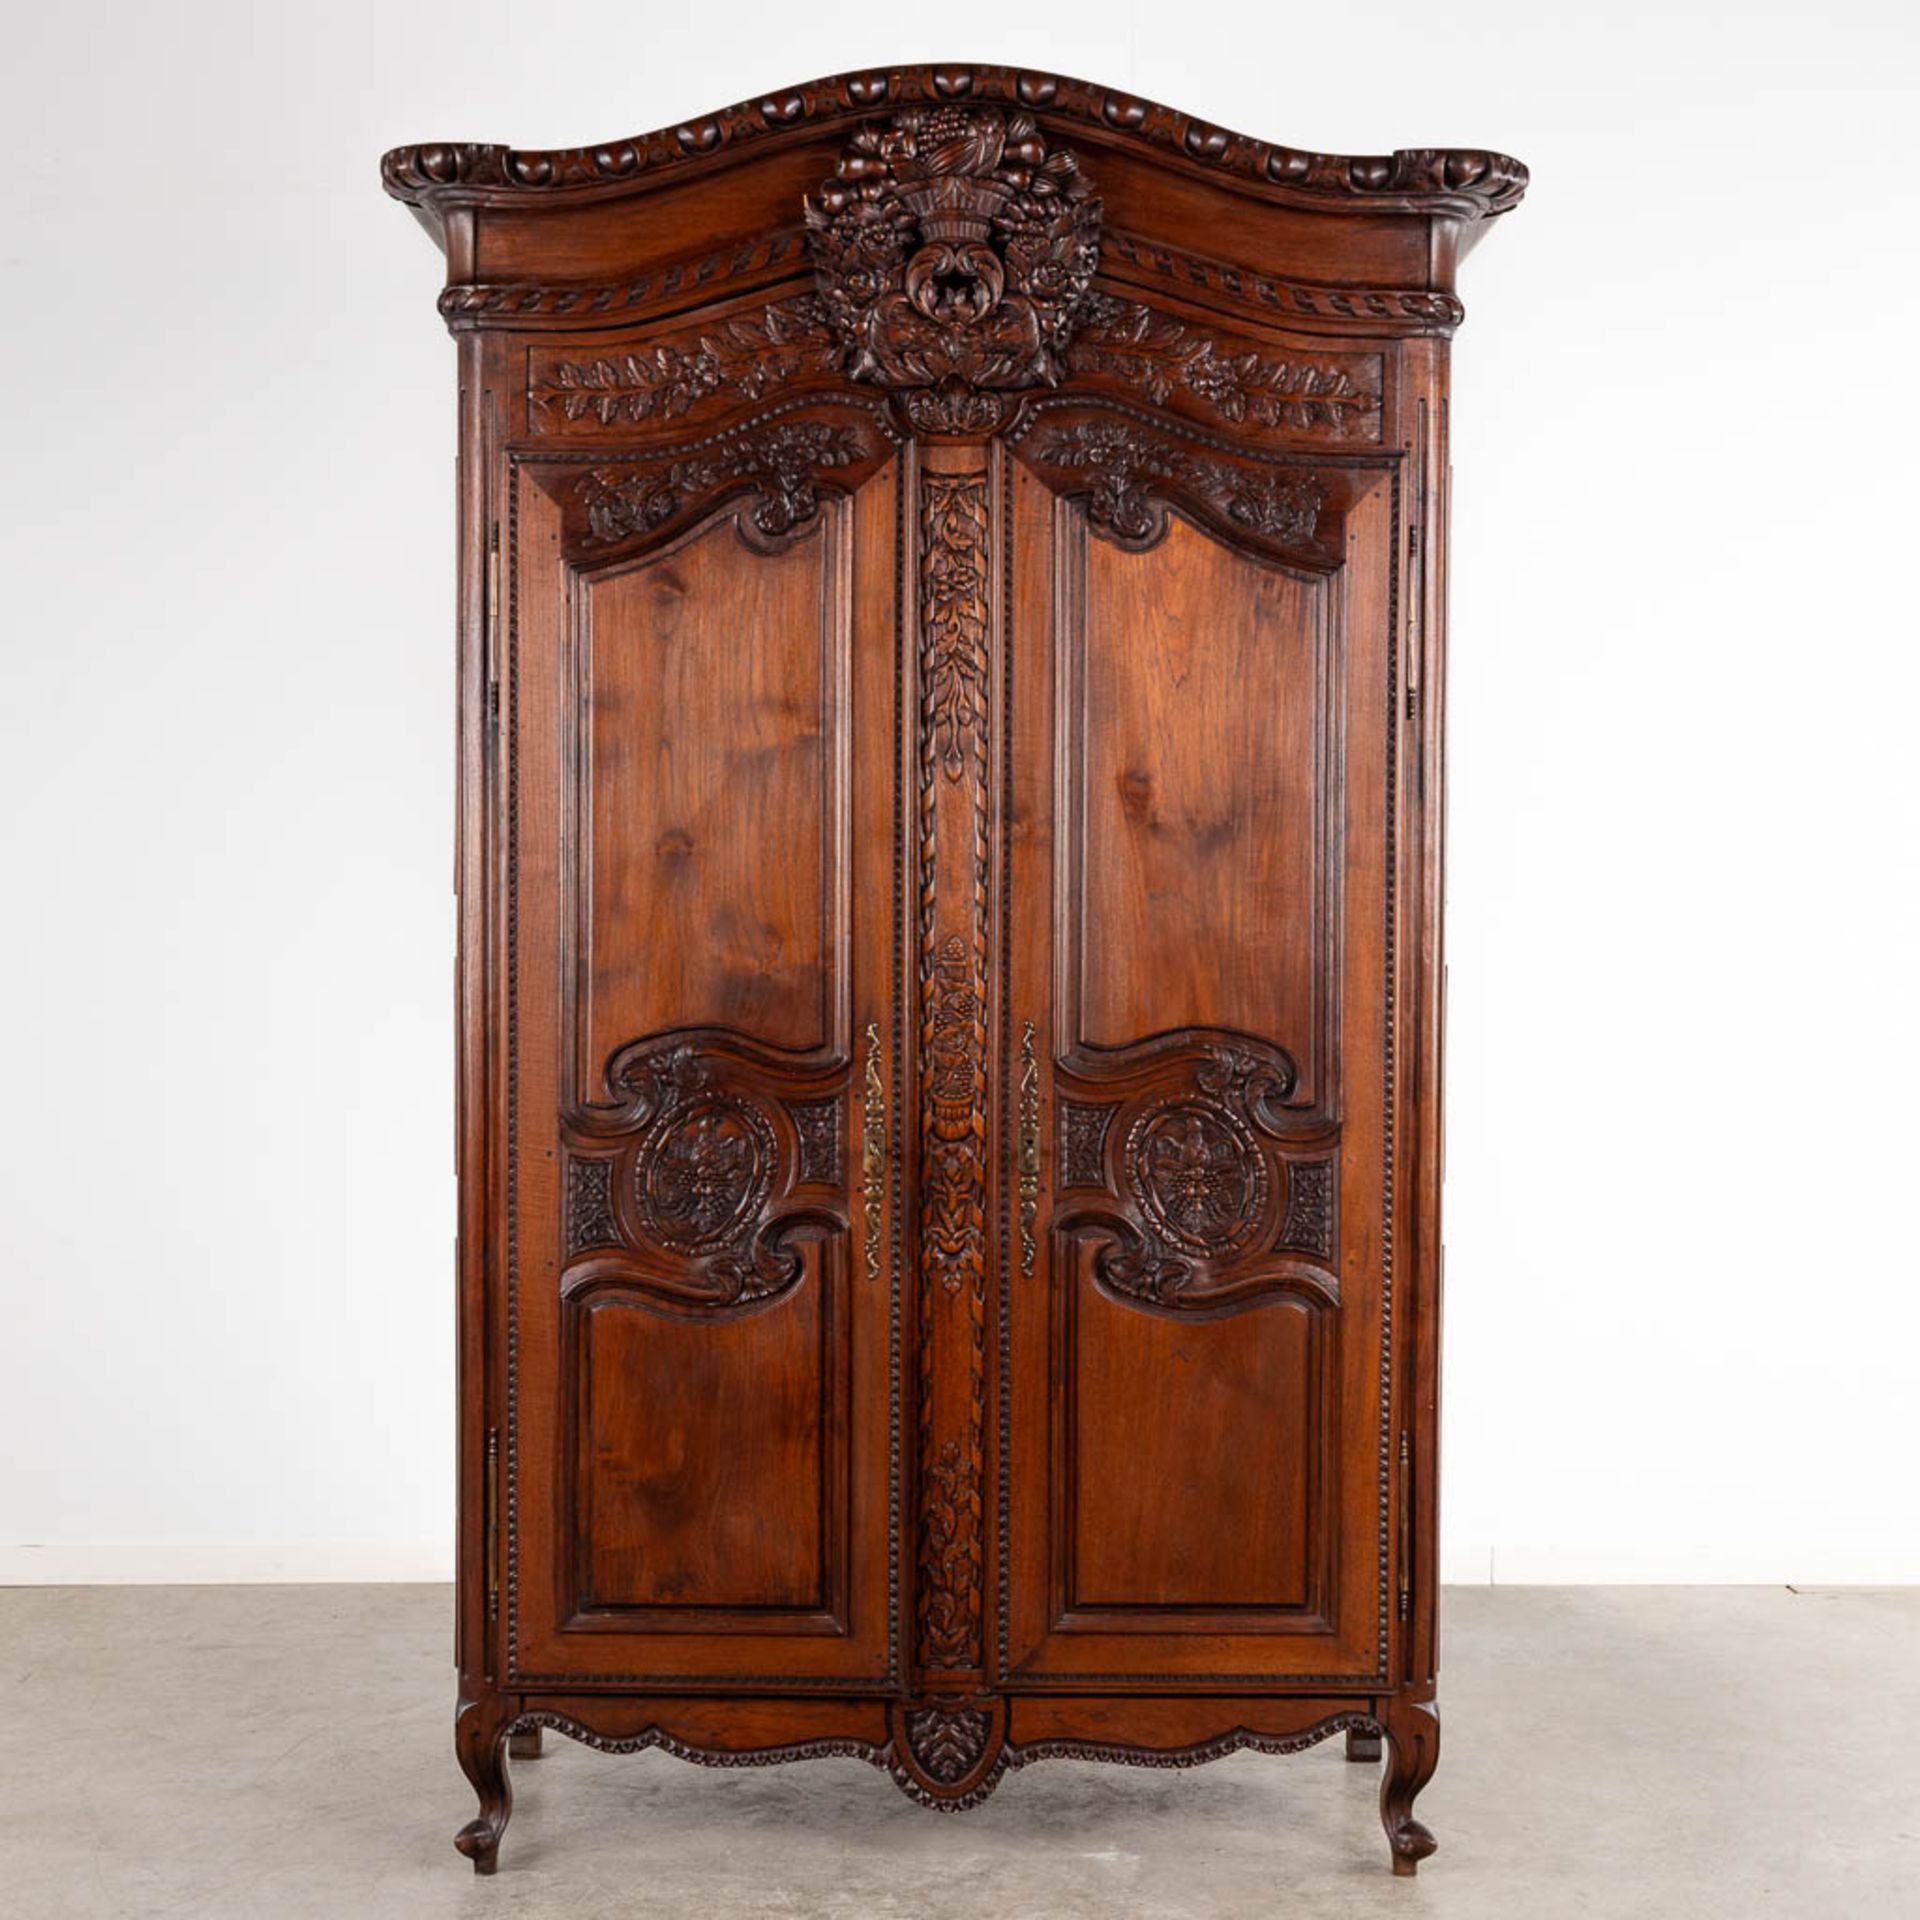 A wardrobe/cabinet, sculptured hardwood. 20th C. (D:64 x W:140 x H:235 cm) - Image 4 of 20